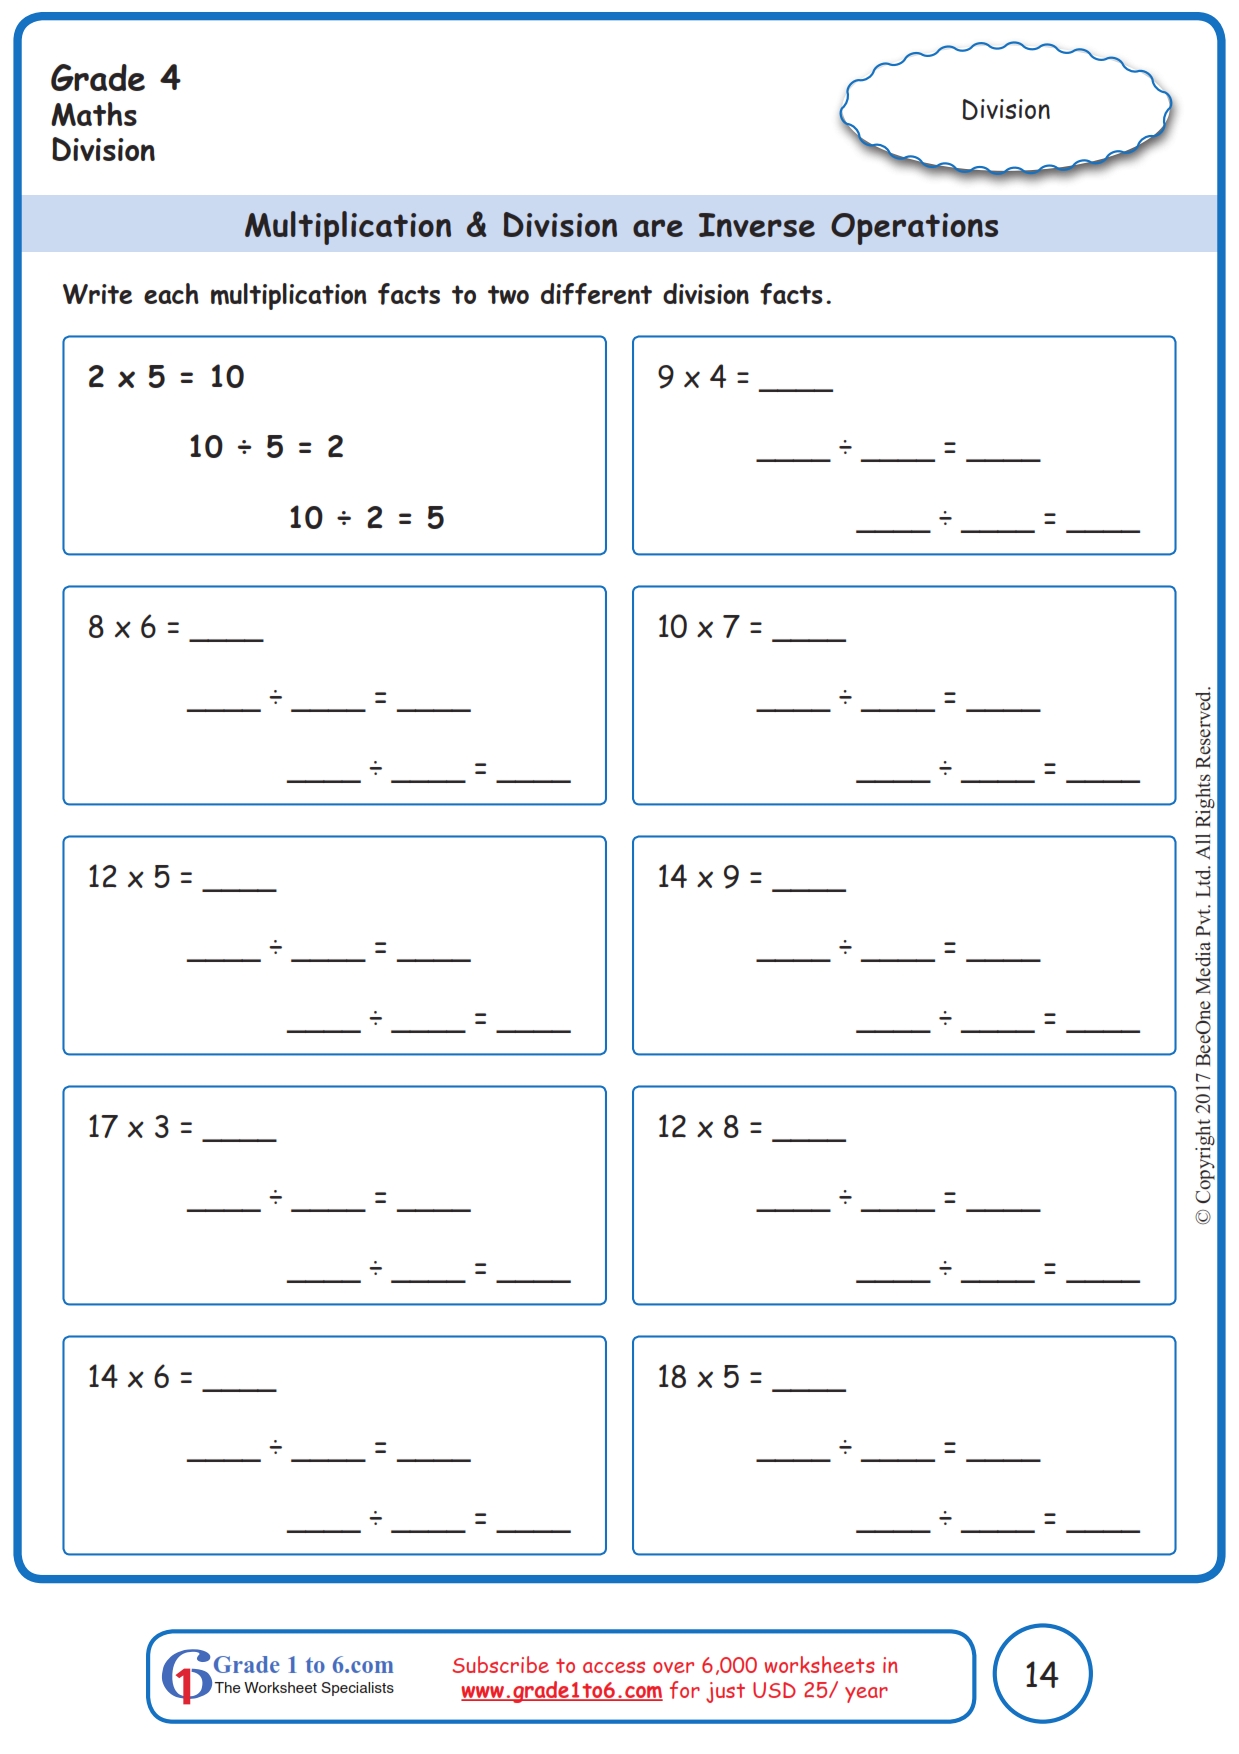 division-as-inverse-of-multiplication-worksheets-best-kids-worksheets